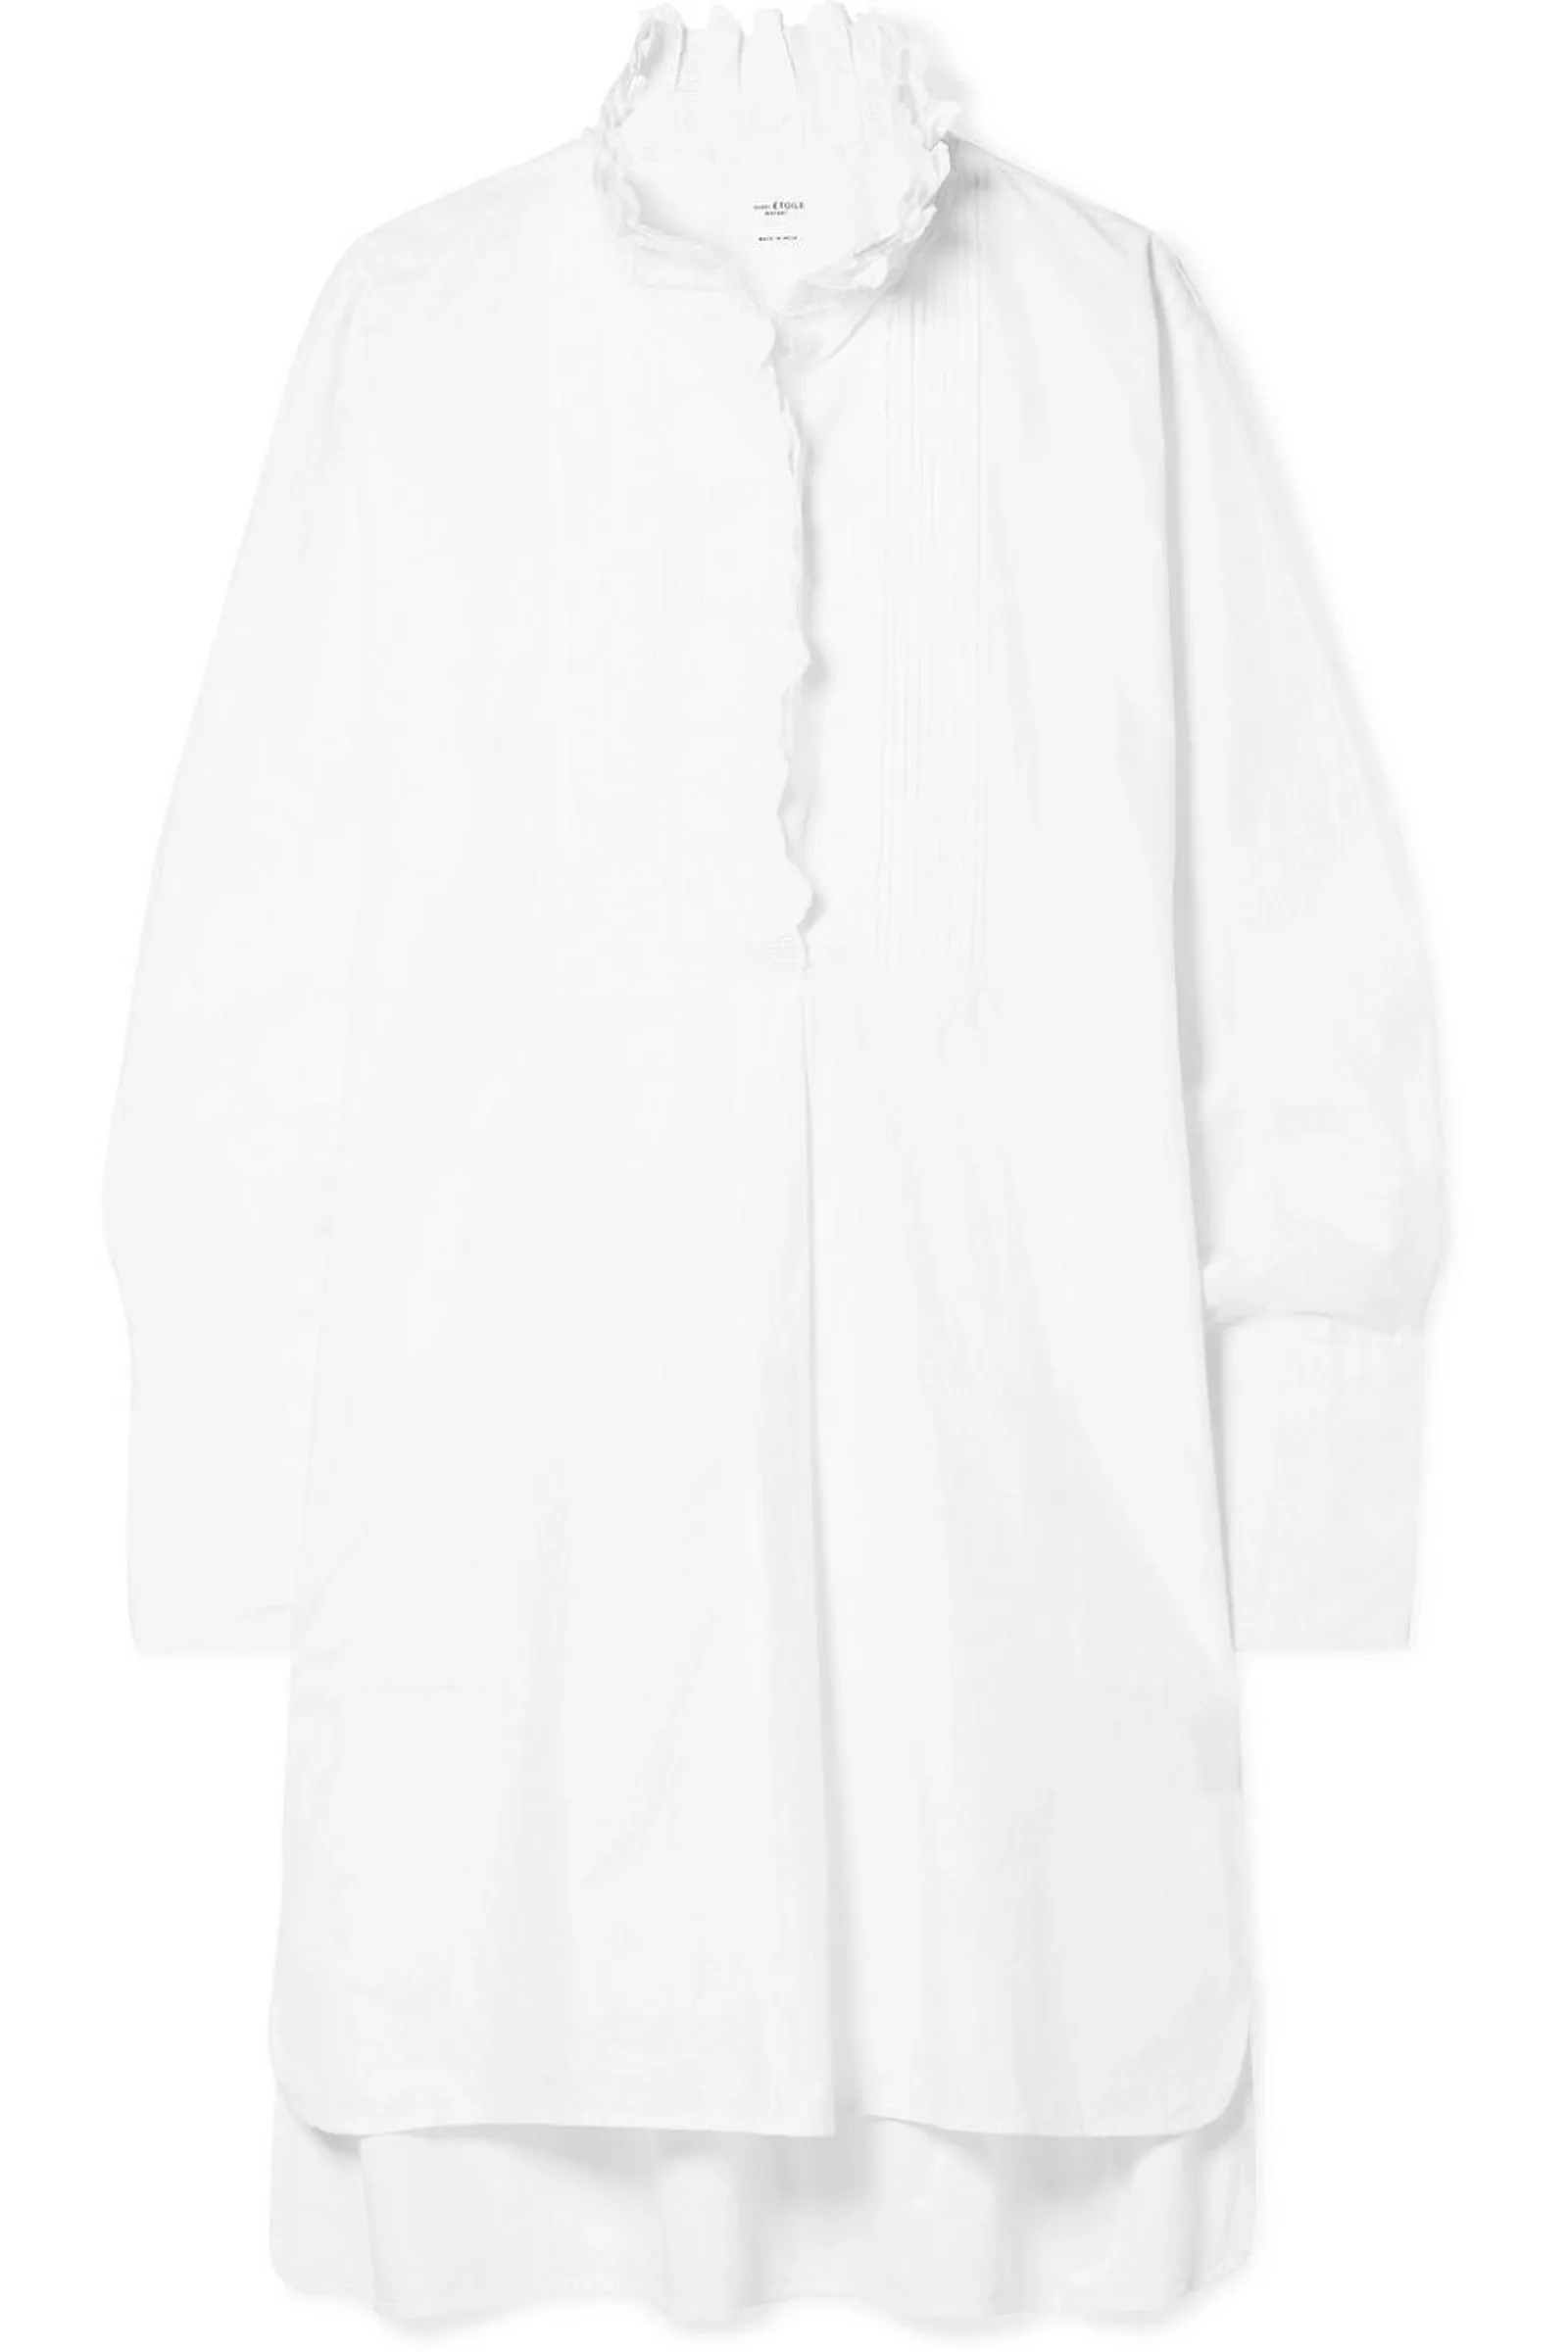 Pilihan Dress Putih Santai untuk Dikenakan Sehari-hari